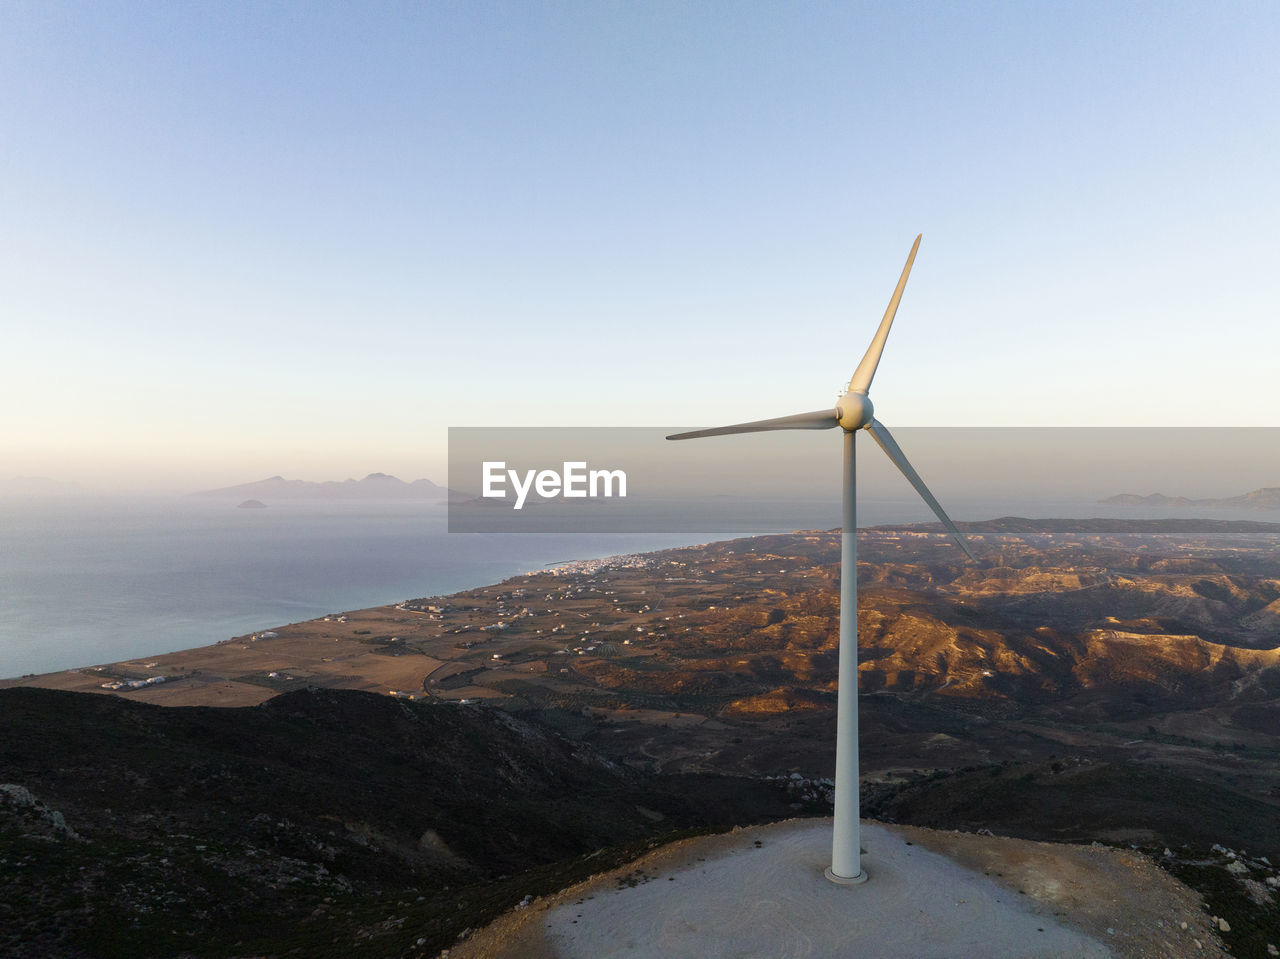 Greece, aegean, kos, hilltop wind turbine at dawn